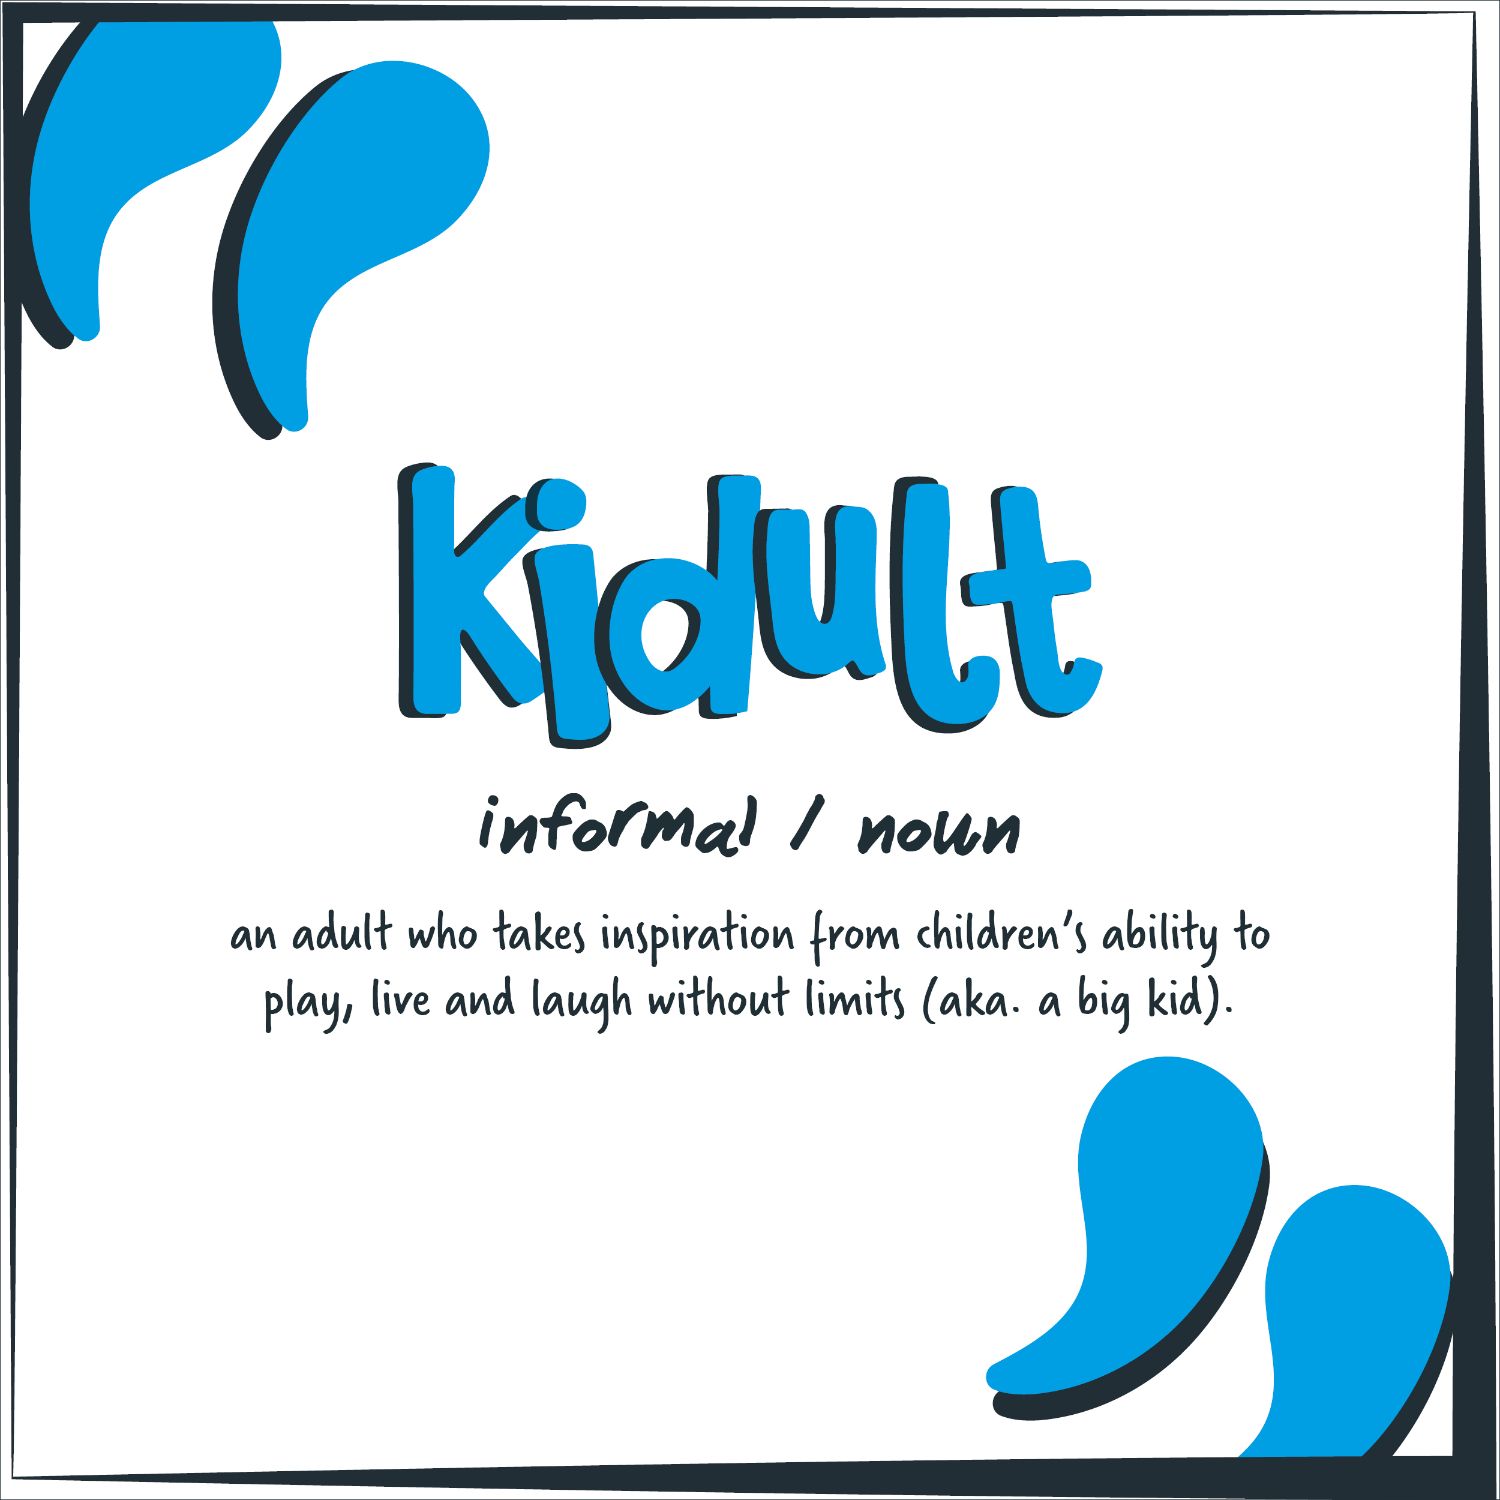 IMAGE: Definition of Kidult